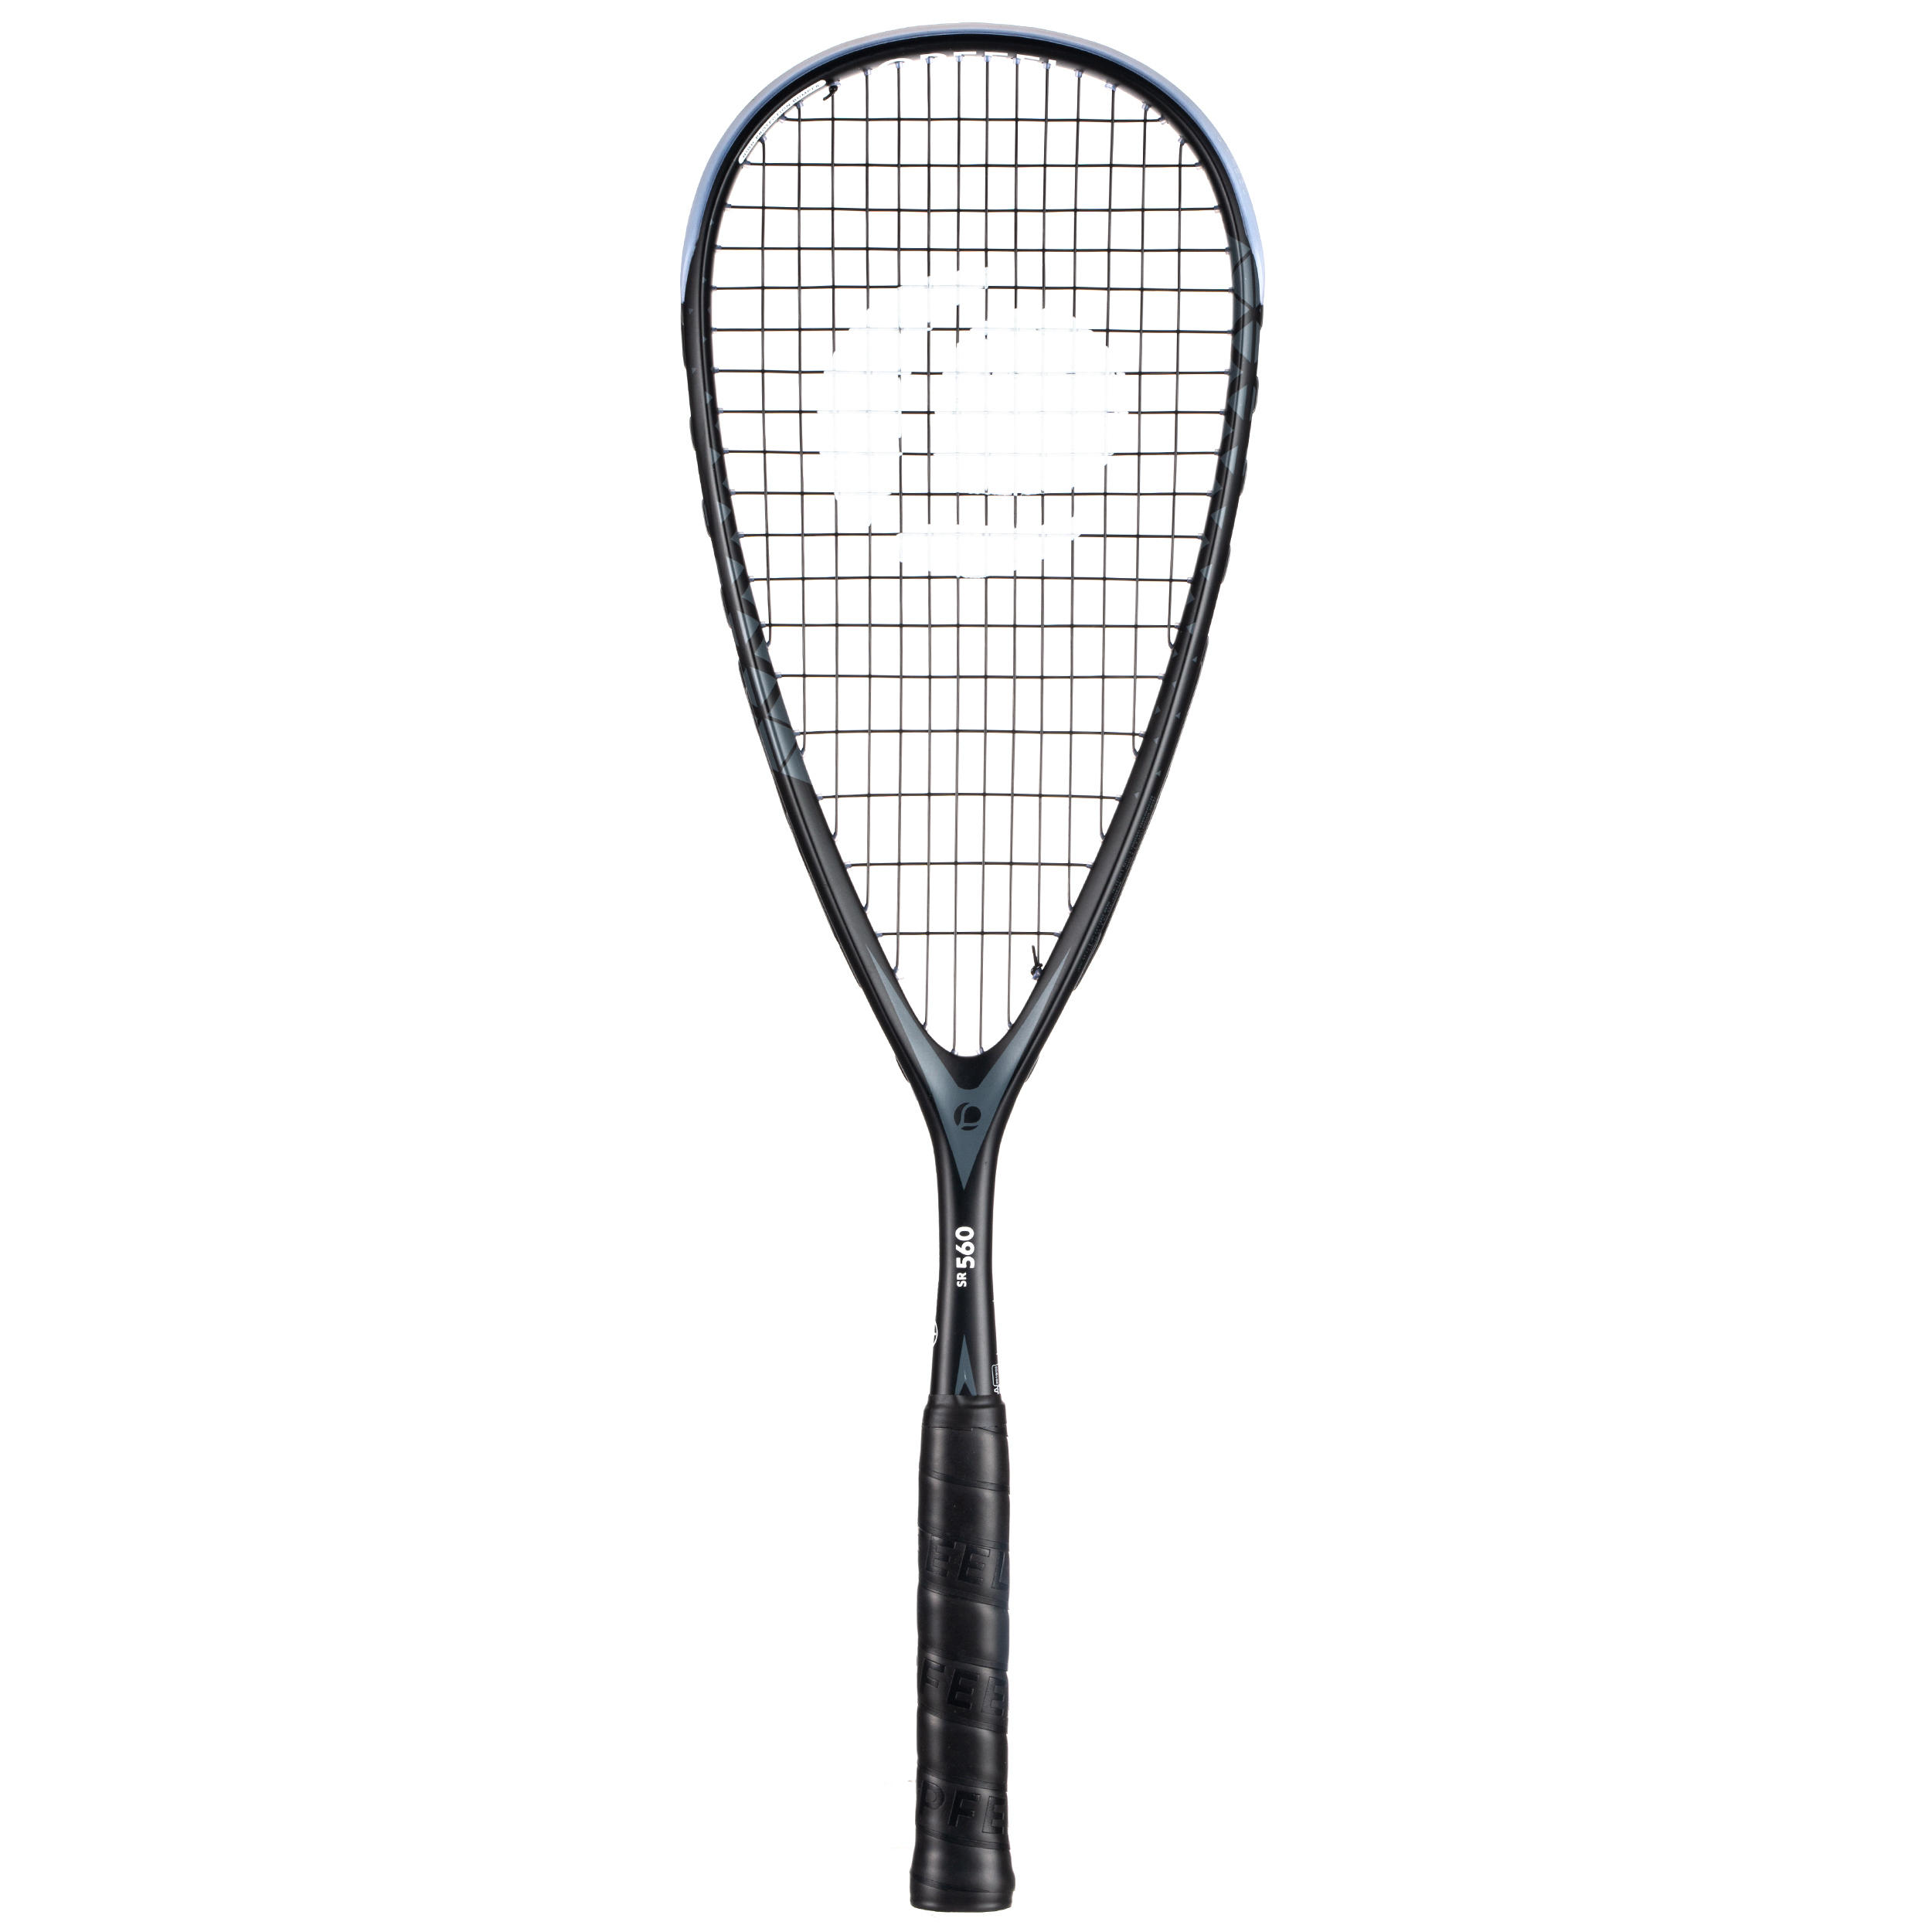 Rachetă Squash SR560 – 145 g La Oferta Online decathlon imagine La Oferta Online